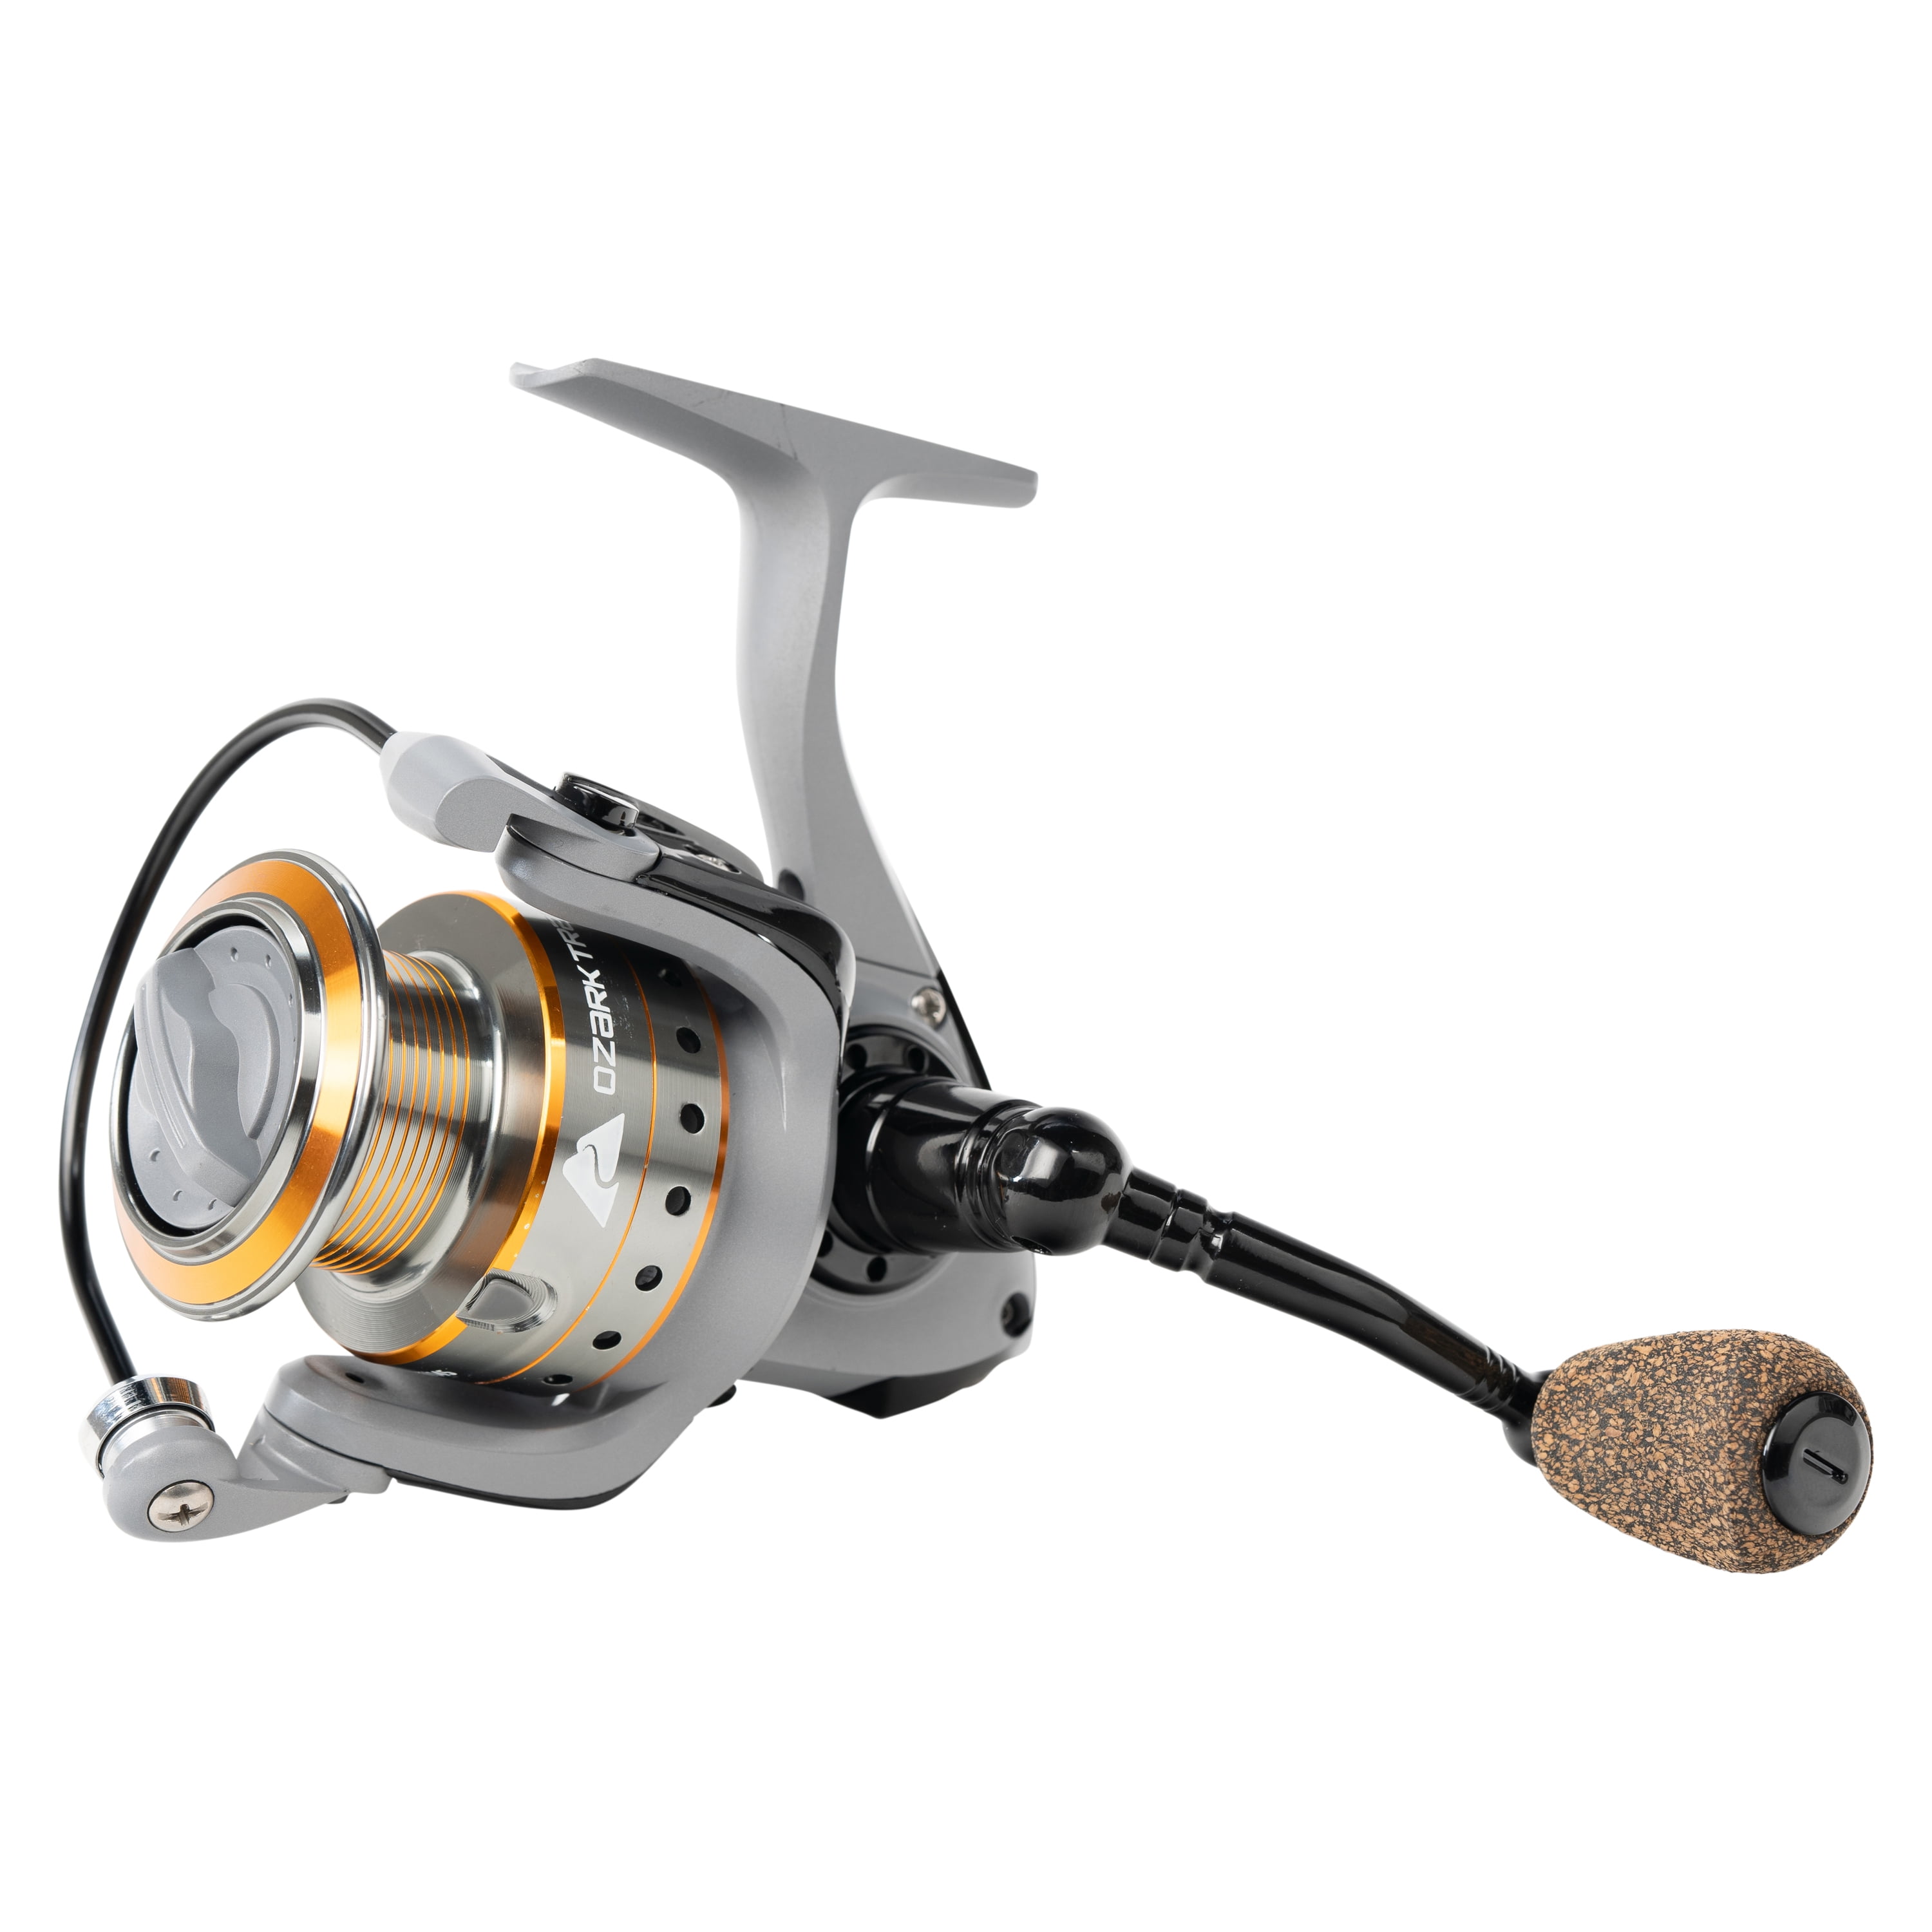 Ozark Trail OTX 3000 Spinning Fishing Reel, 5.1:1 Gear Ratio, Gray